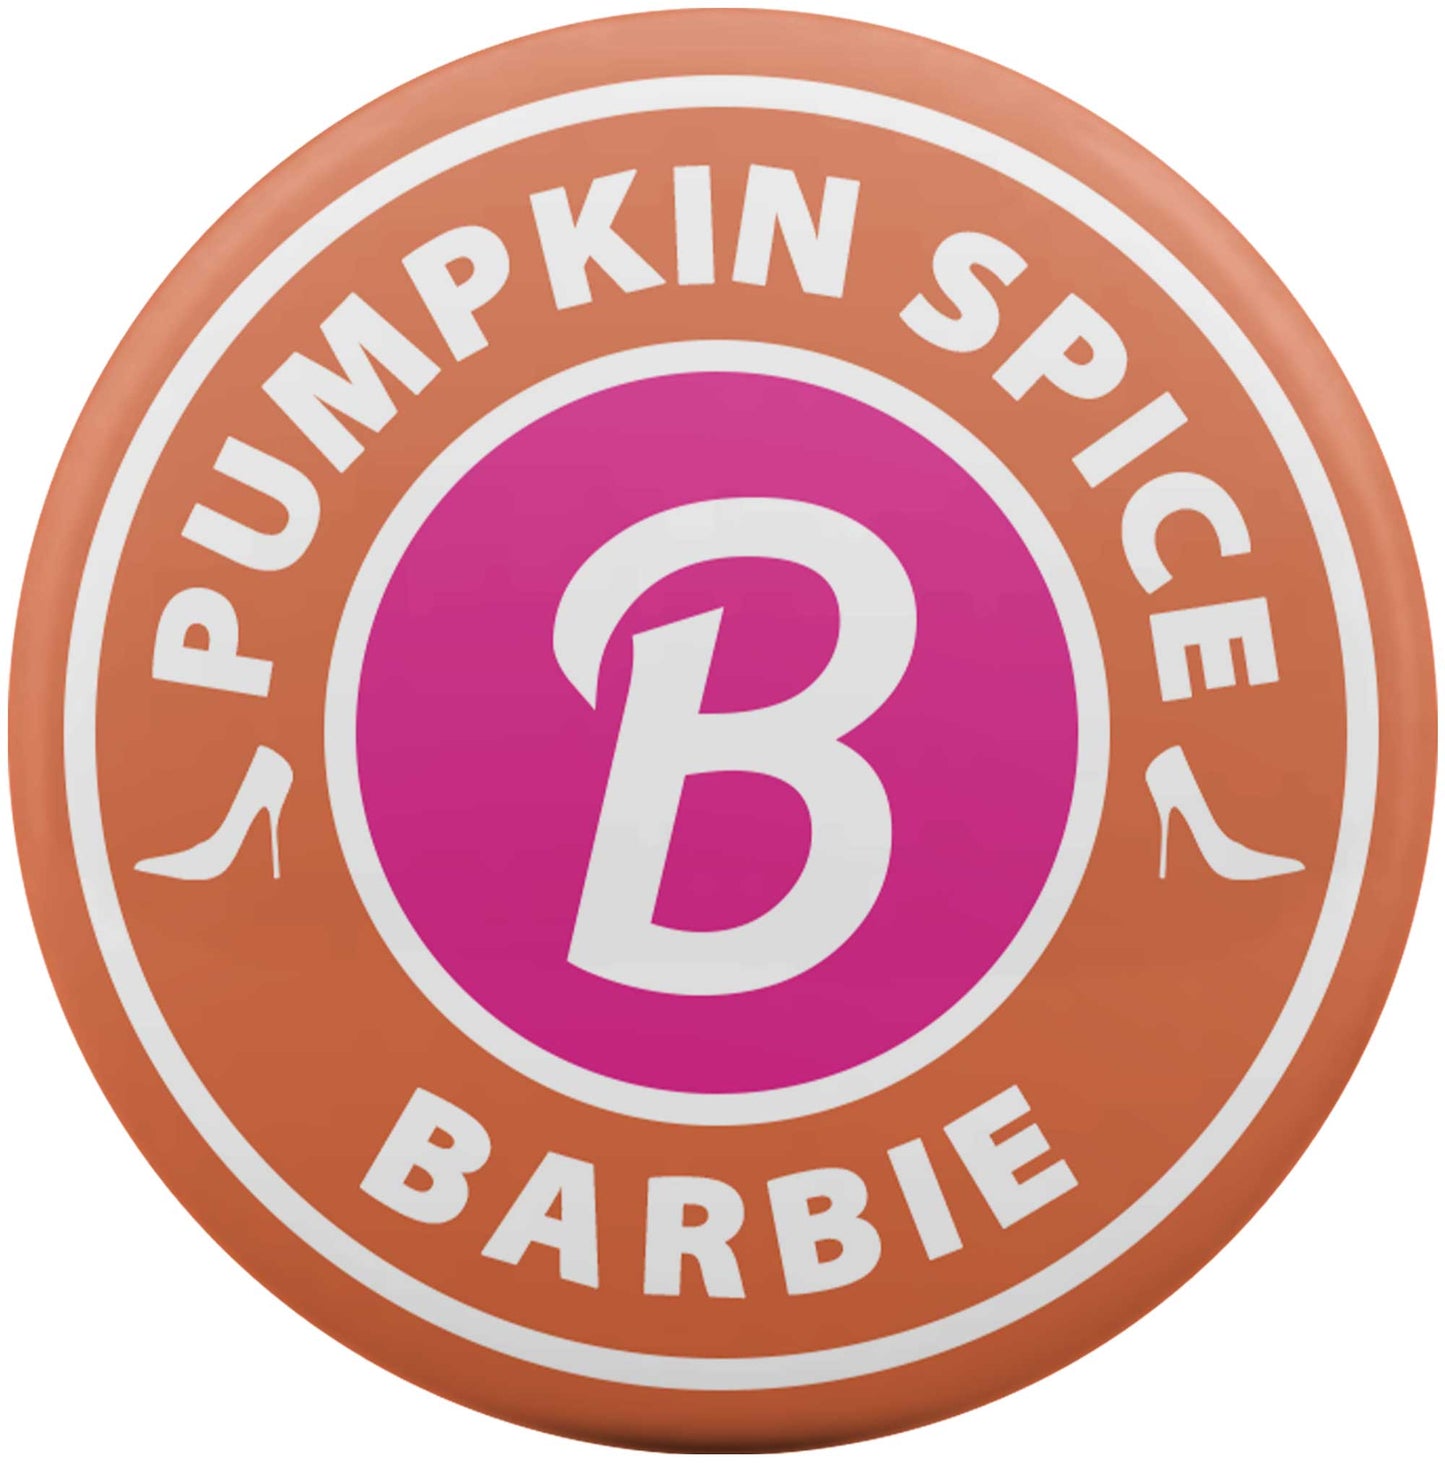 Pumpkin Spice Barbie